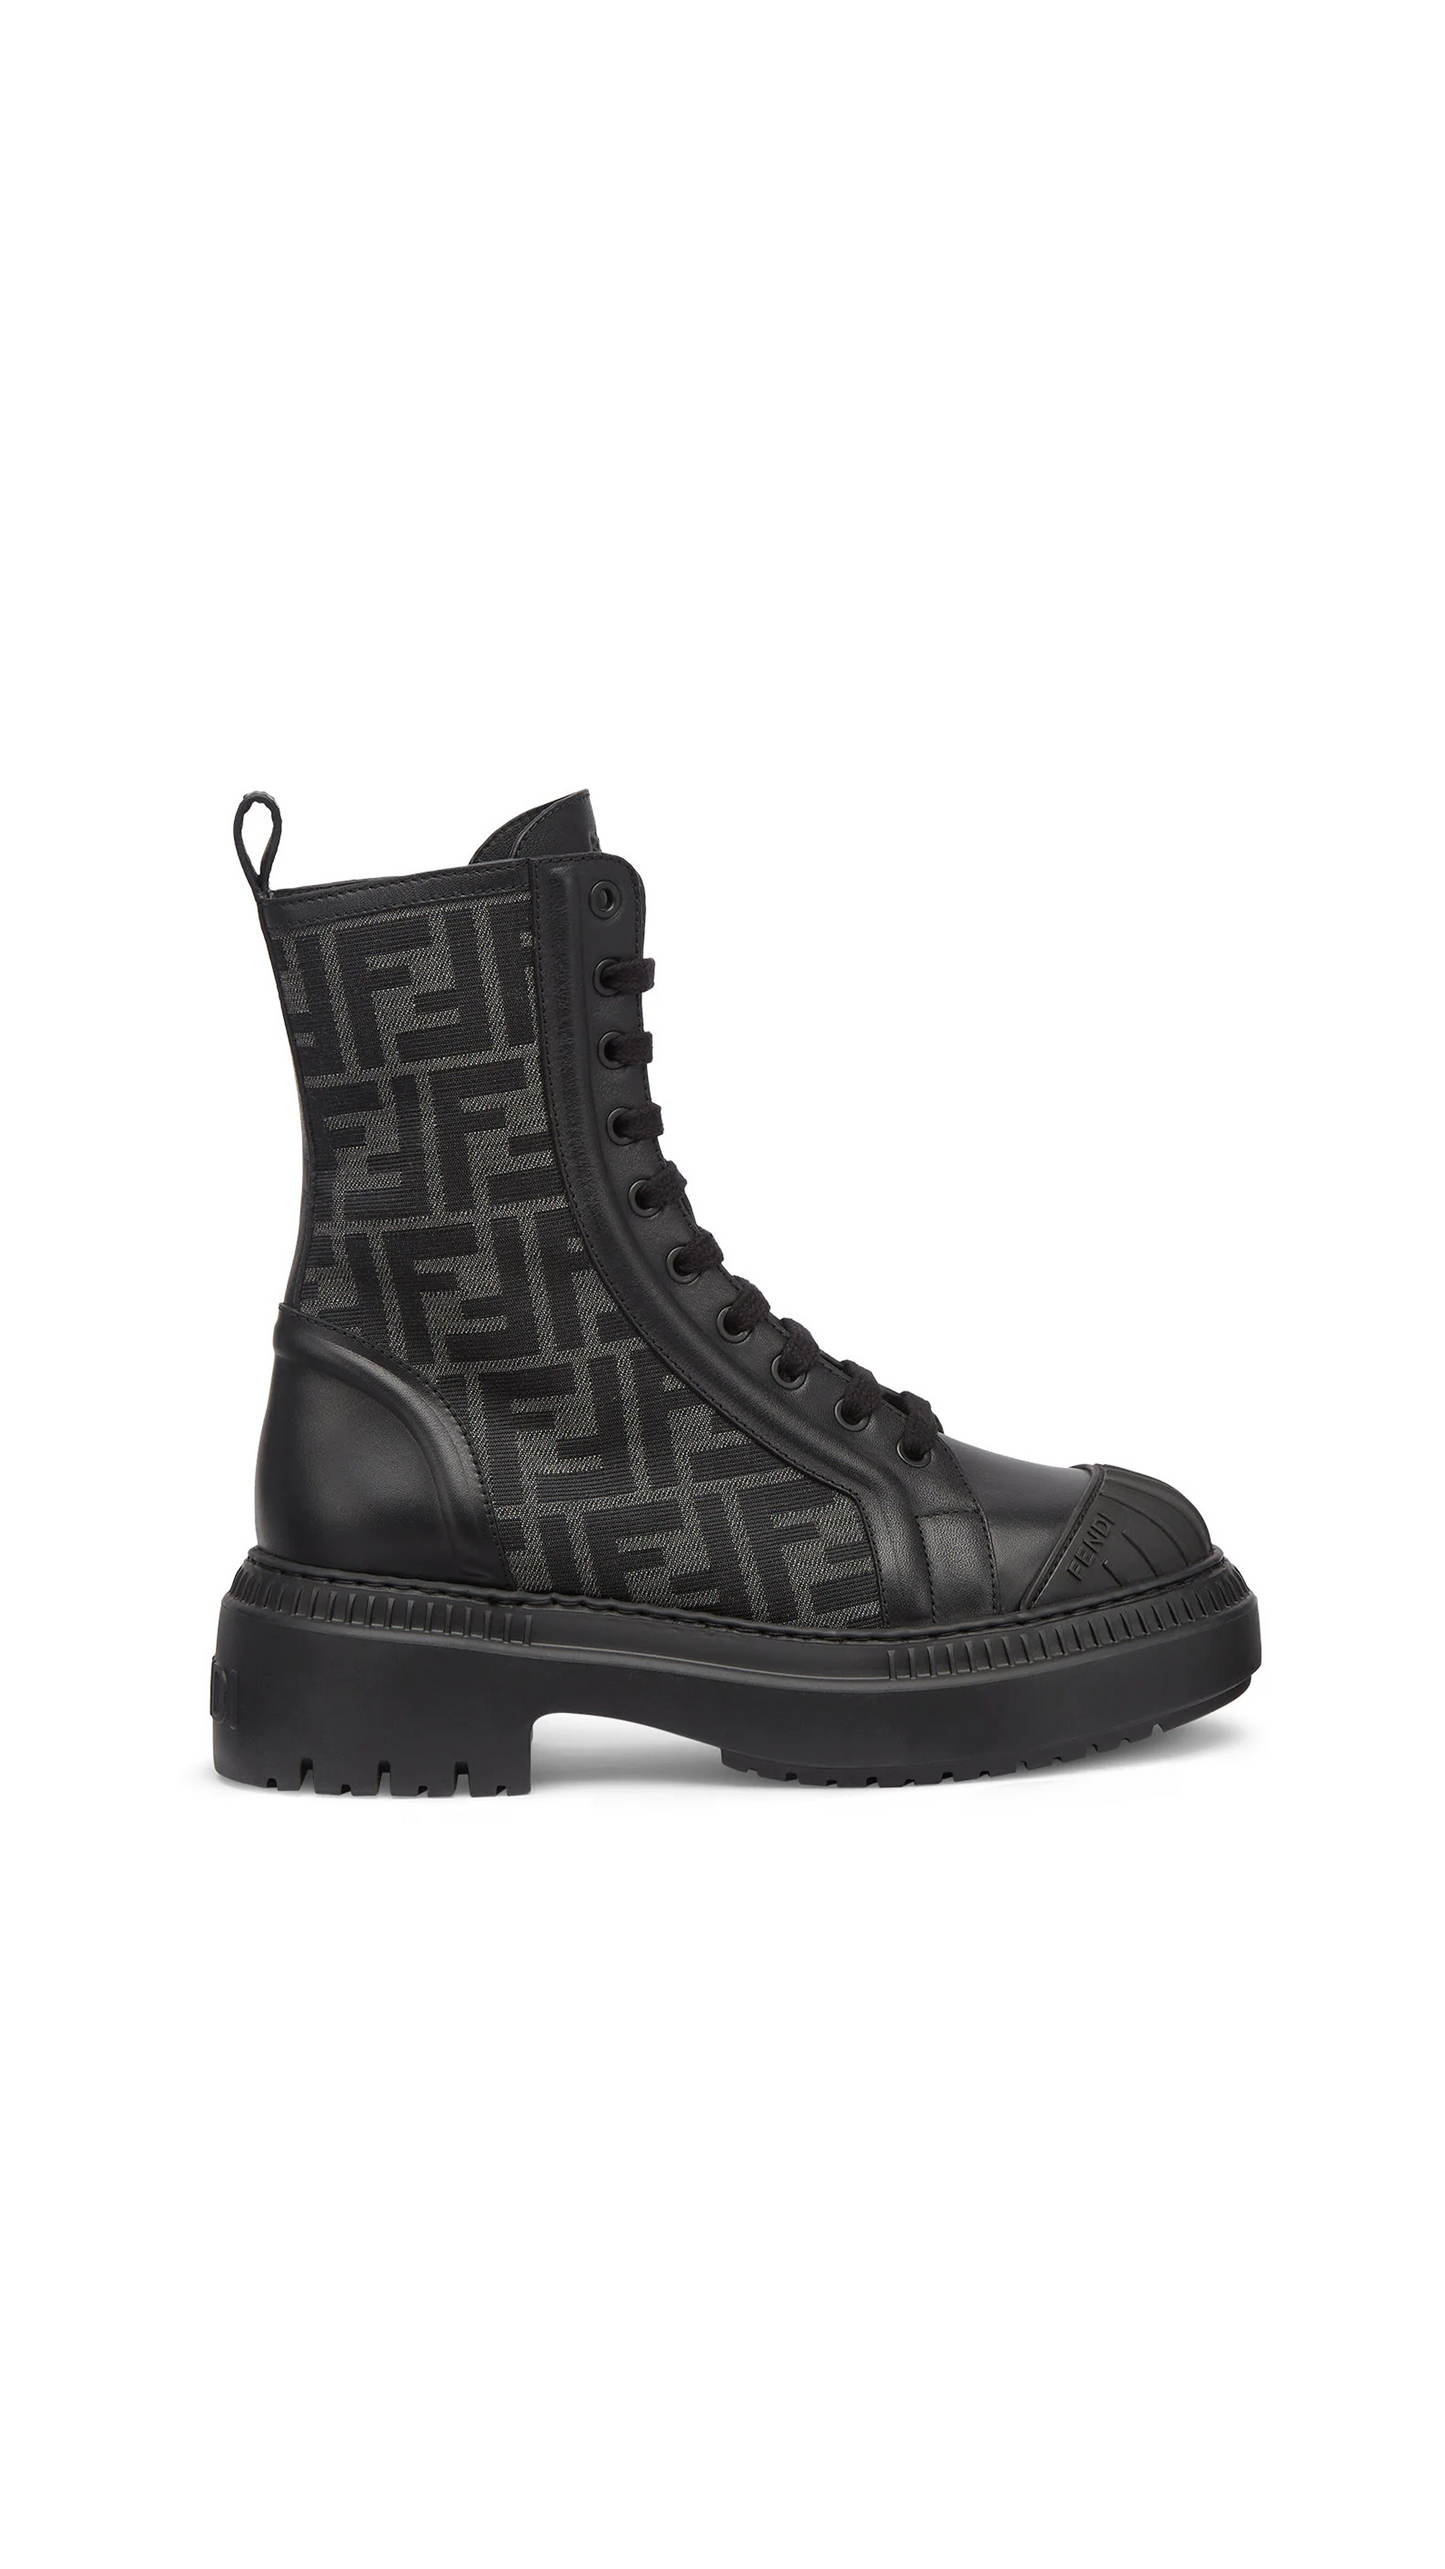 Domino Leather Biker Boots - Black